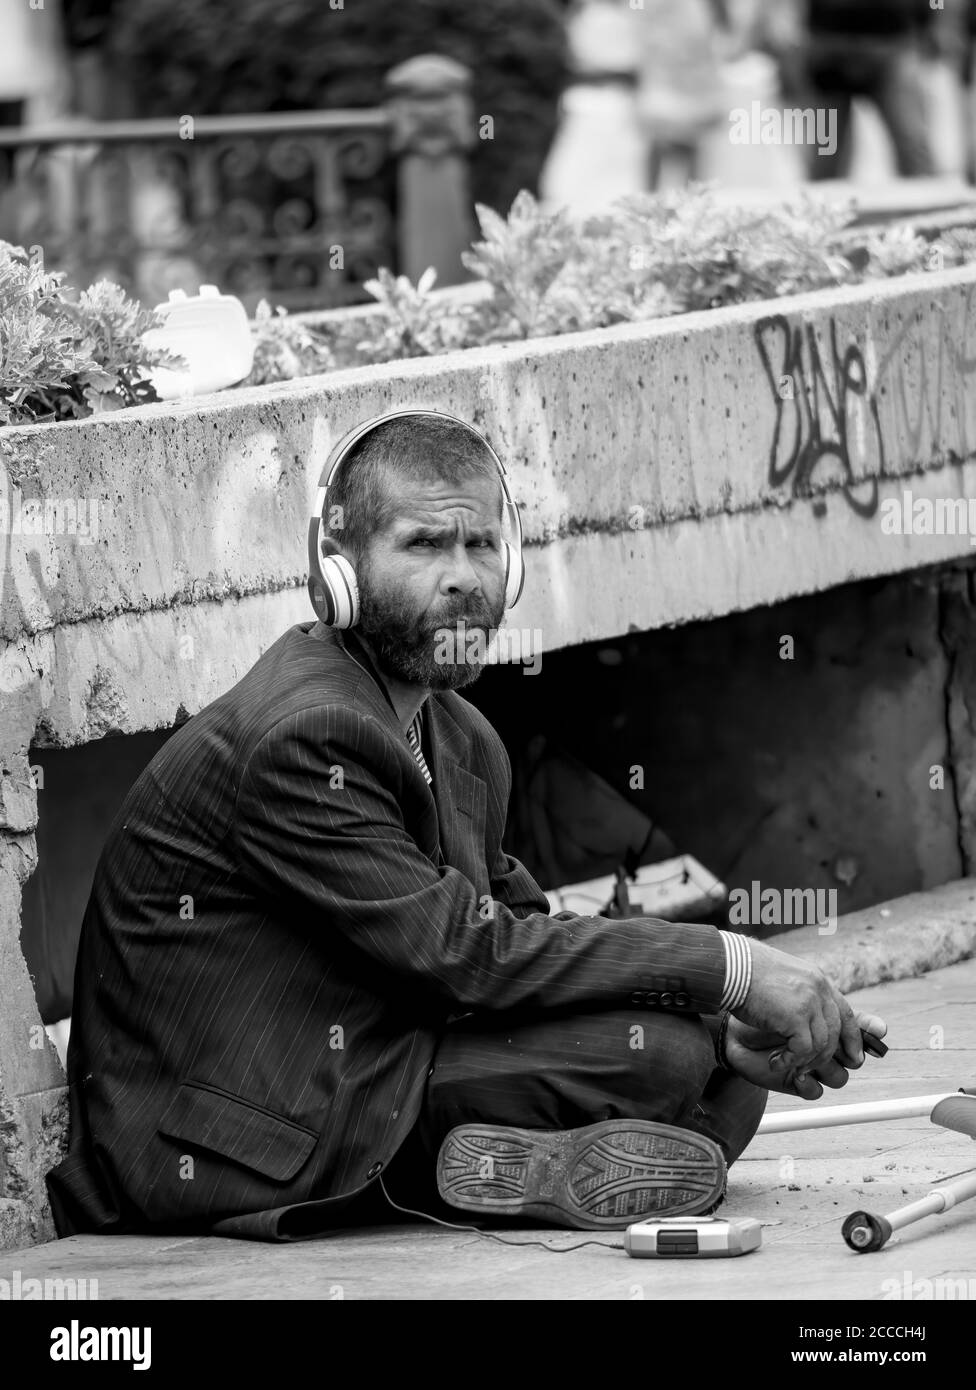 Bucharest/Romania - 07.25.2020: Homeless man or beggar sitting on the sidewalk and wearing headphones. Stock Photo